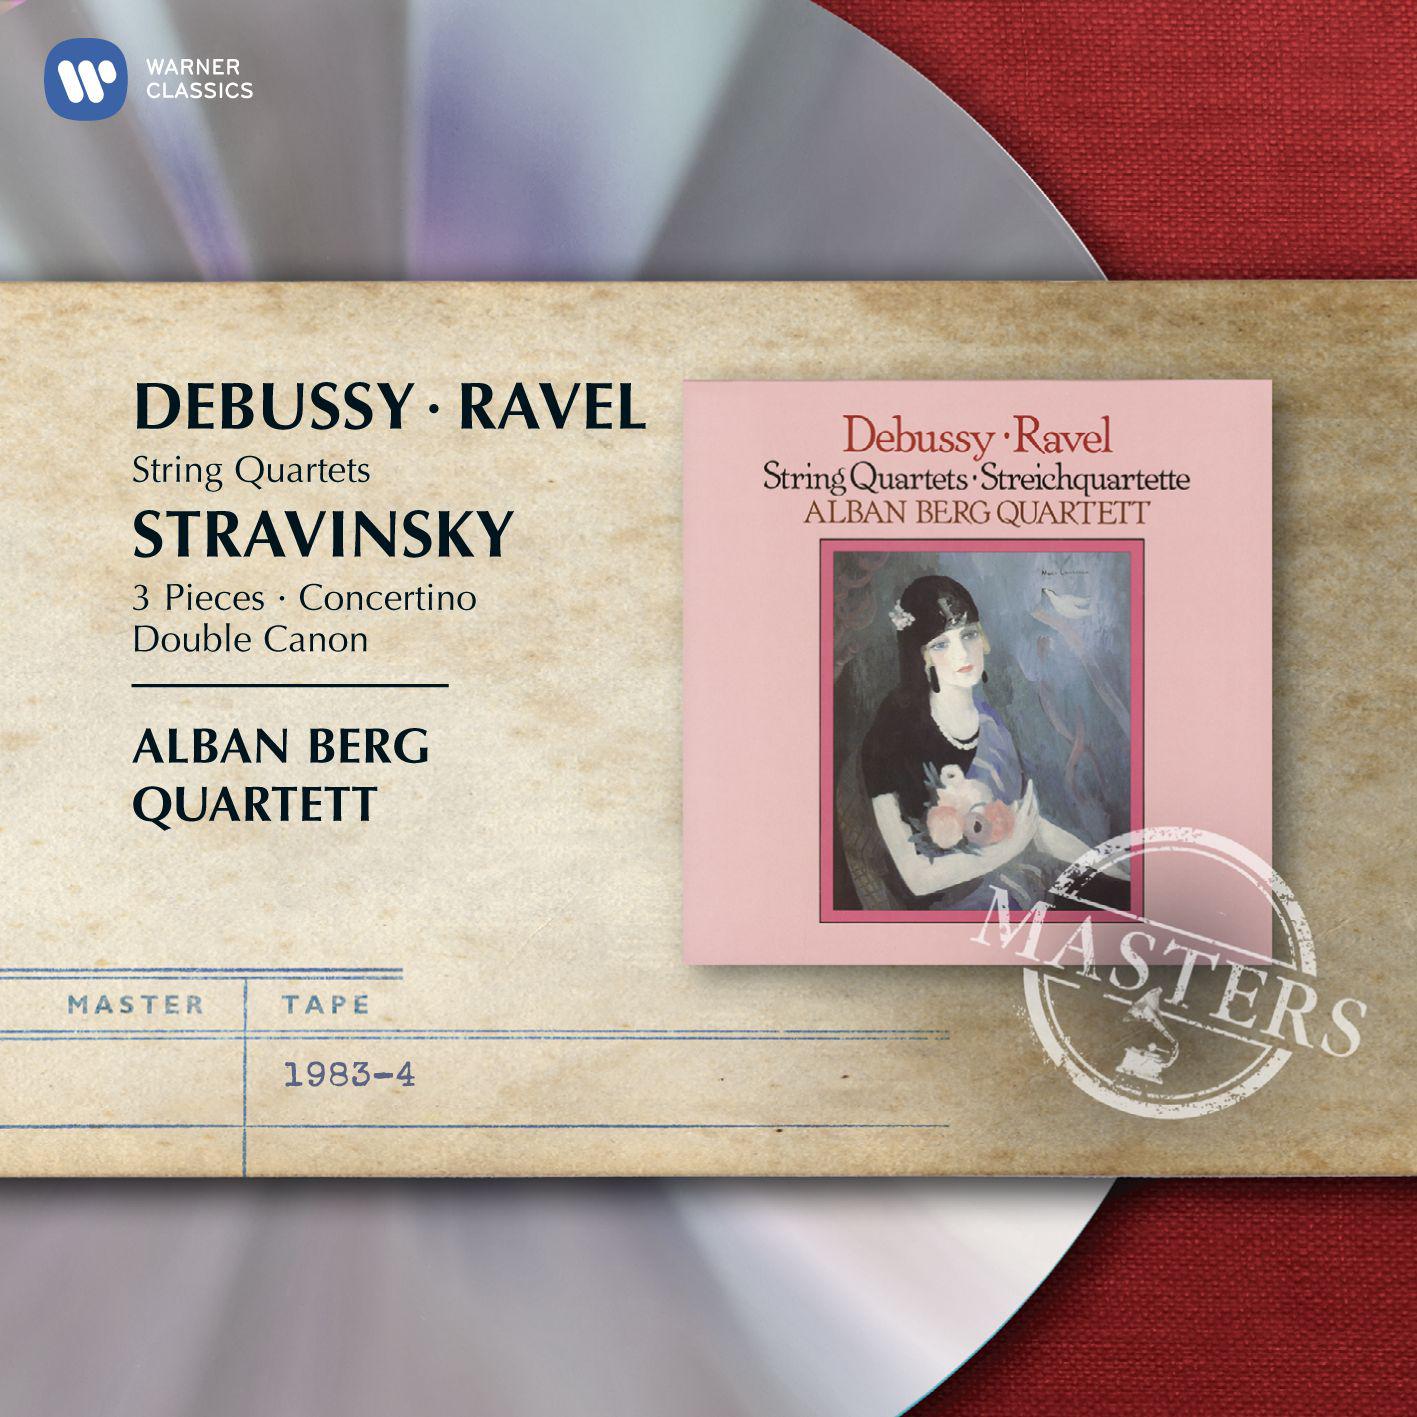 Double Canon for String Quartet "Raoul Dufy in memoriam"